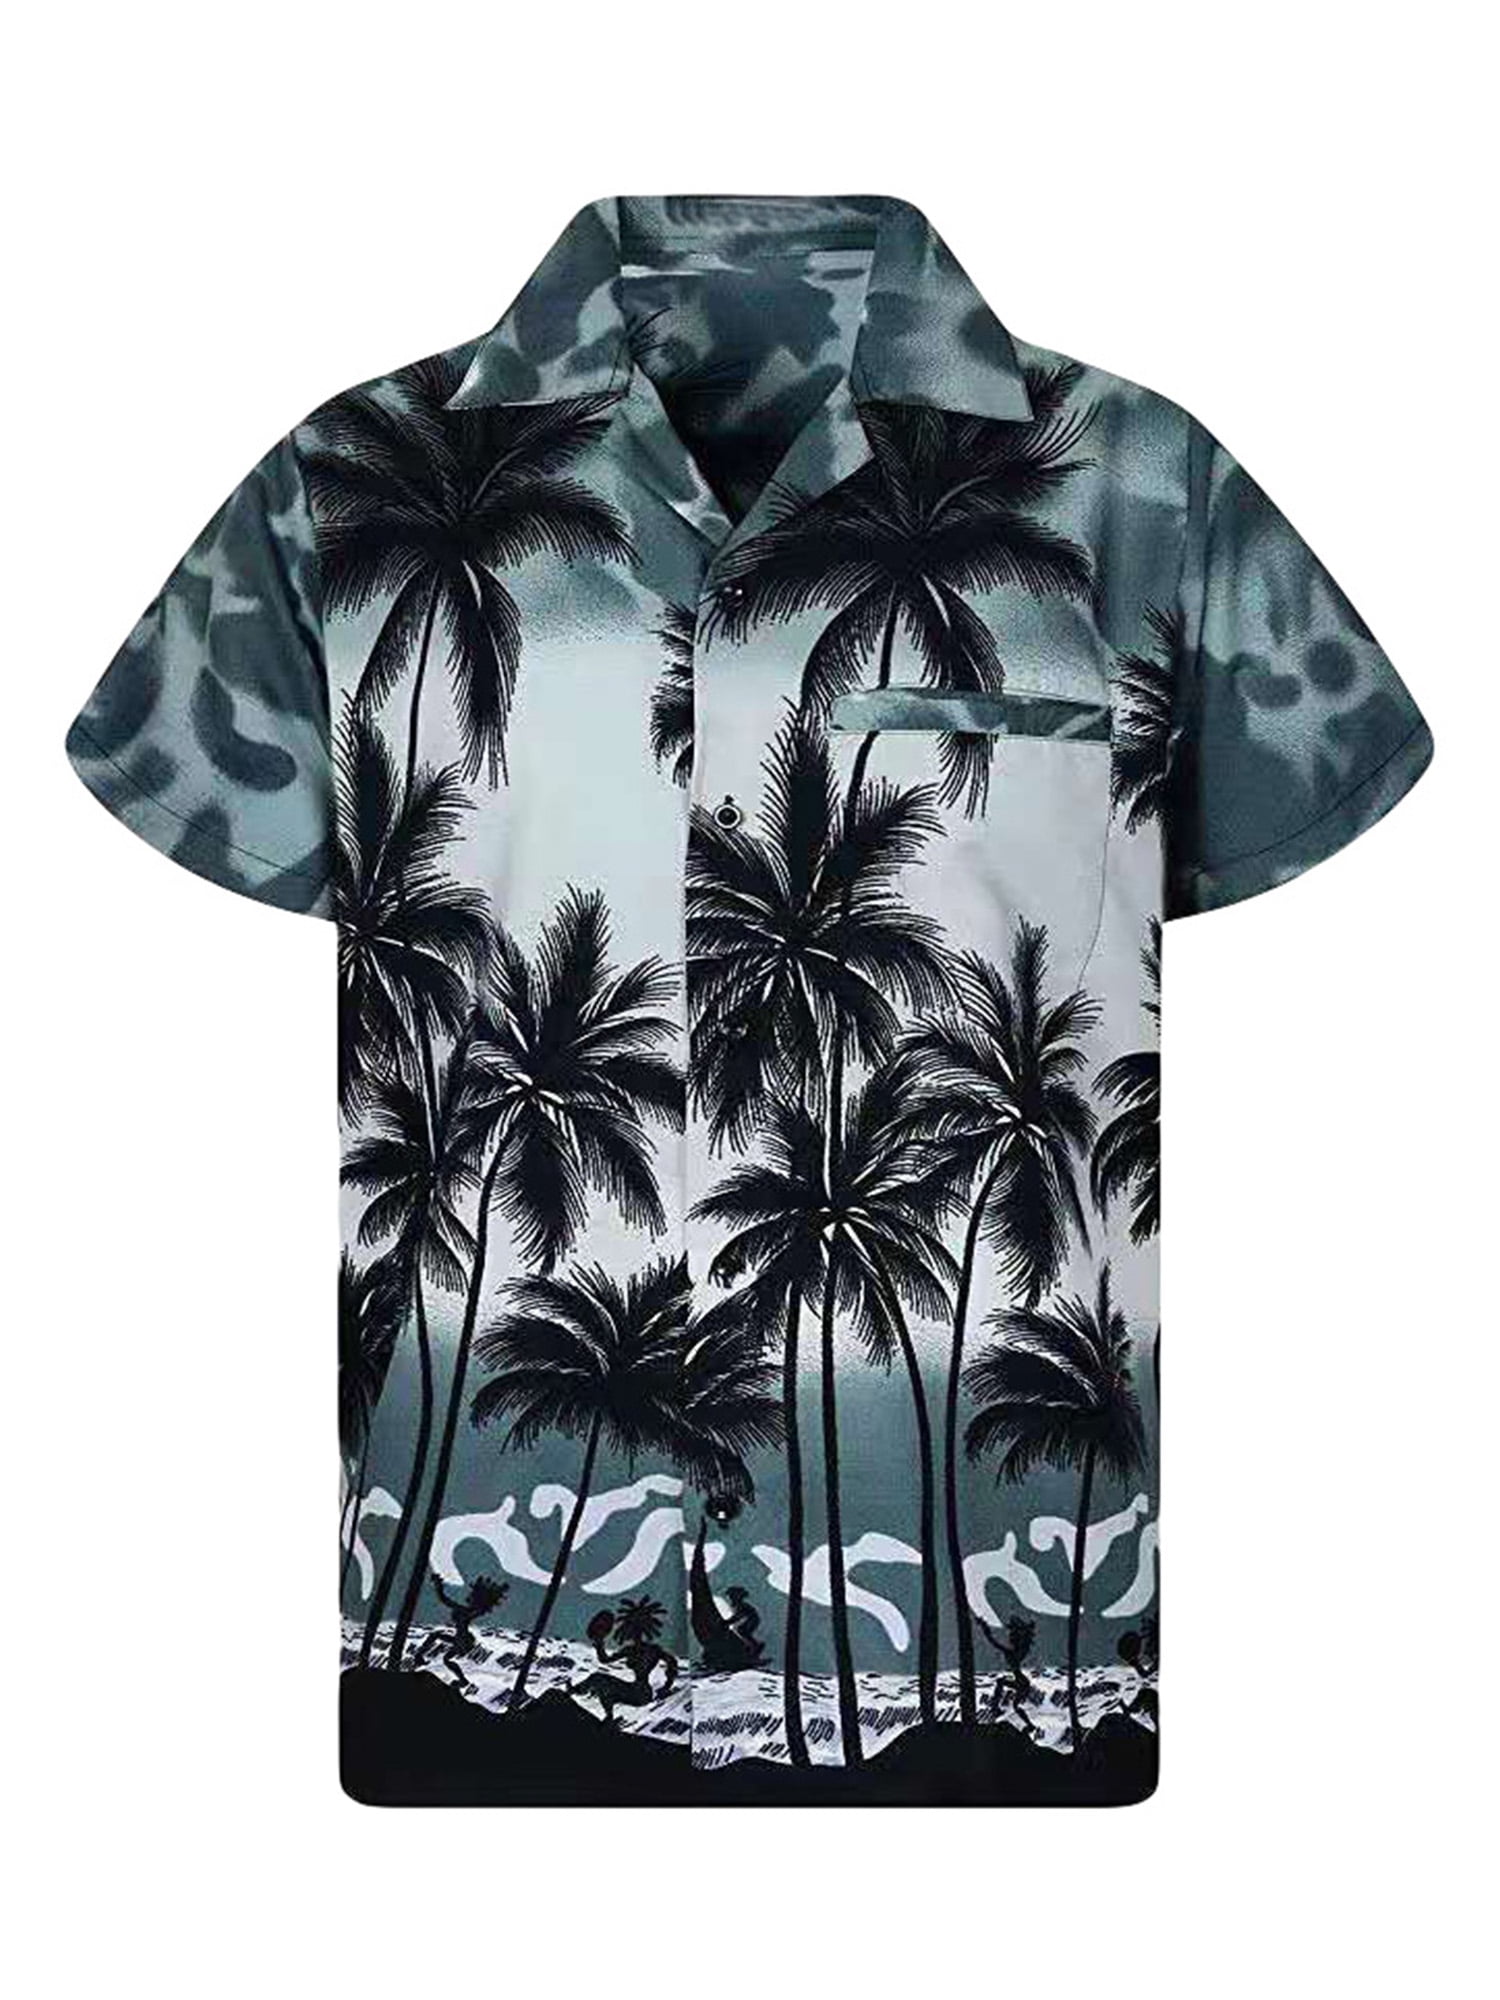 Jofemuho Men Tropical Shirt Hawaiian Casual Quick Dry Short Sleeve Print Button Up Shirts 